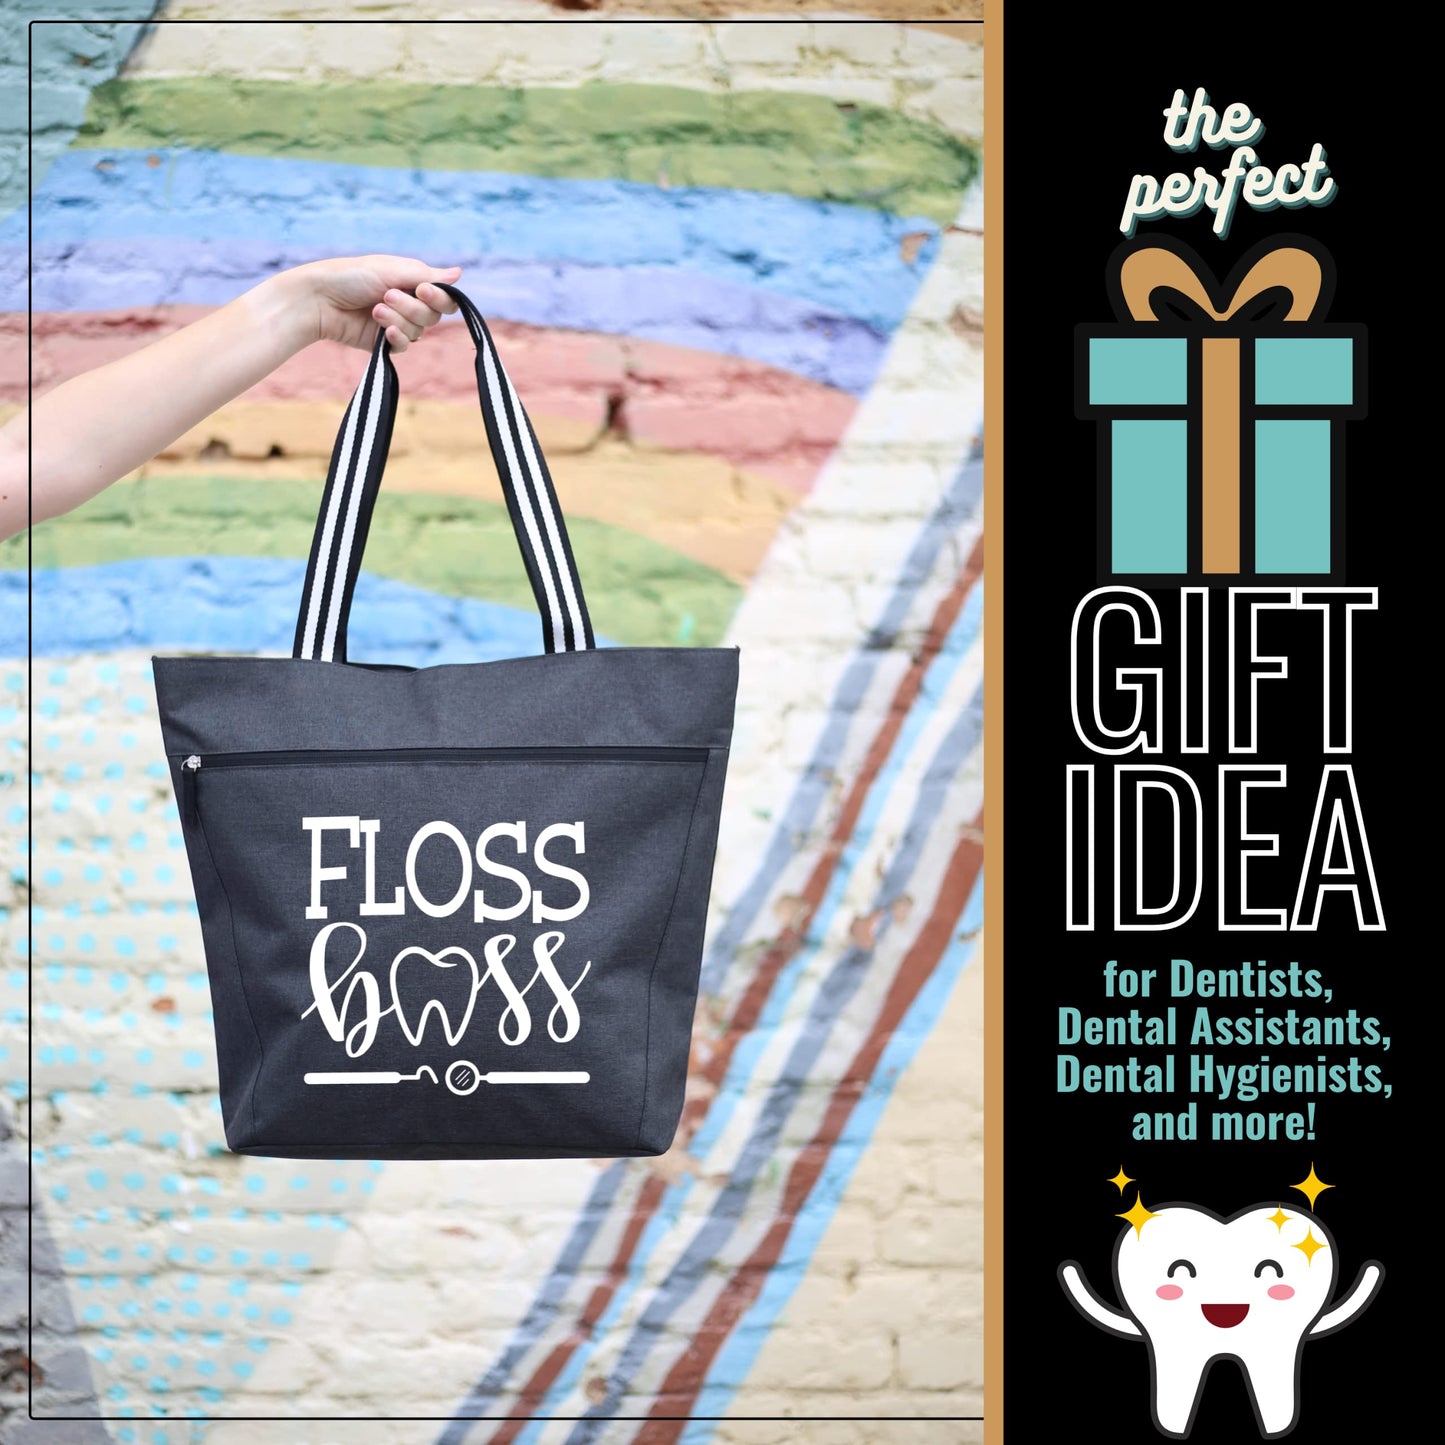 Floss Boss Lexie  Black  Tote Bag for Dental Workers